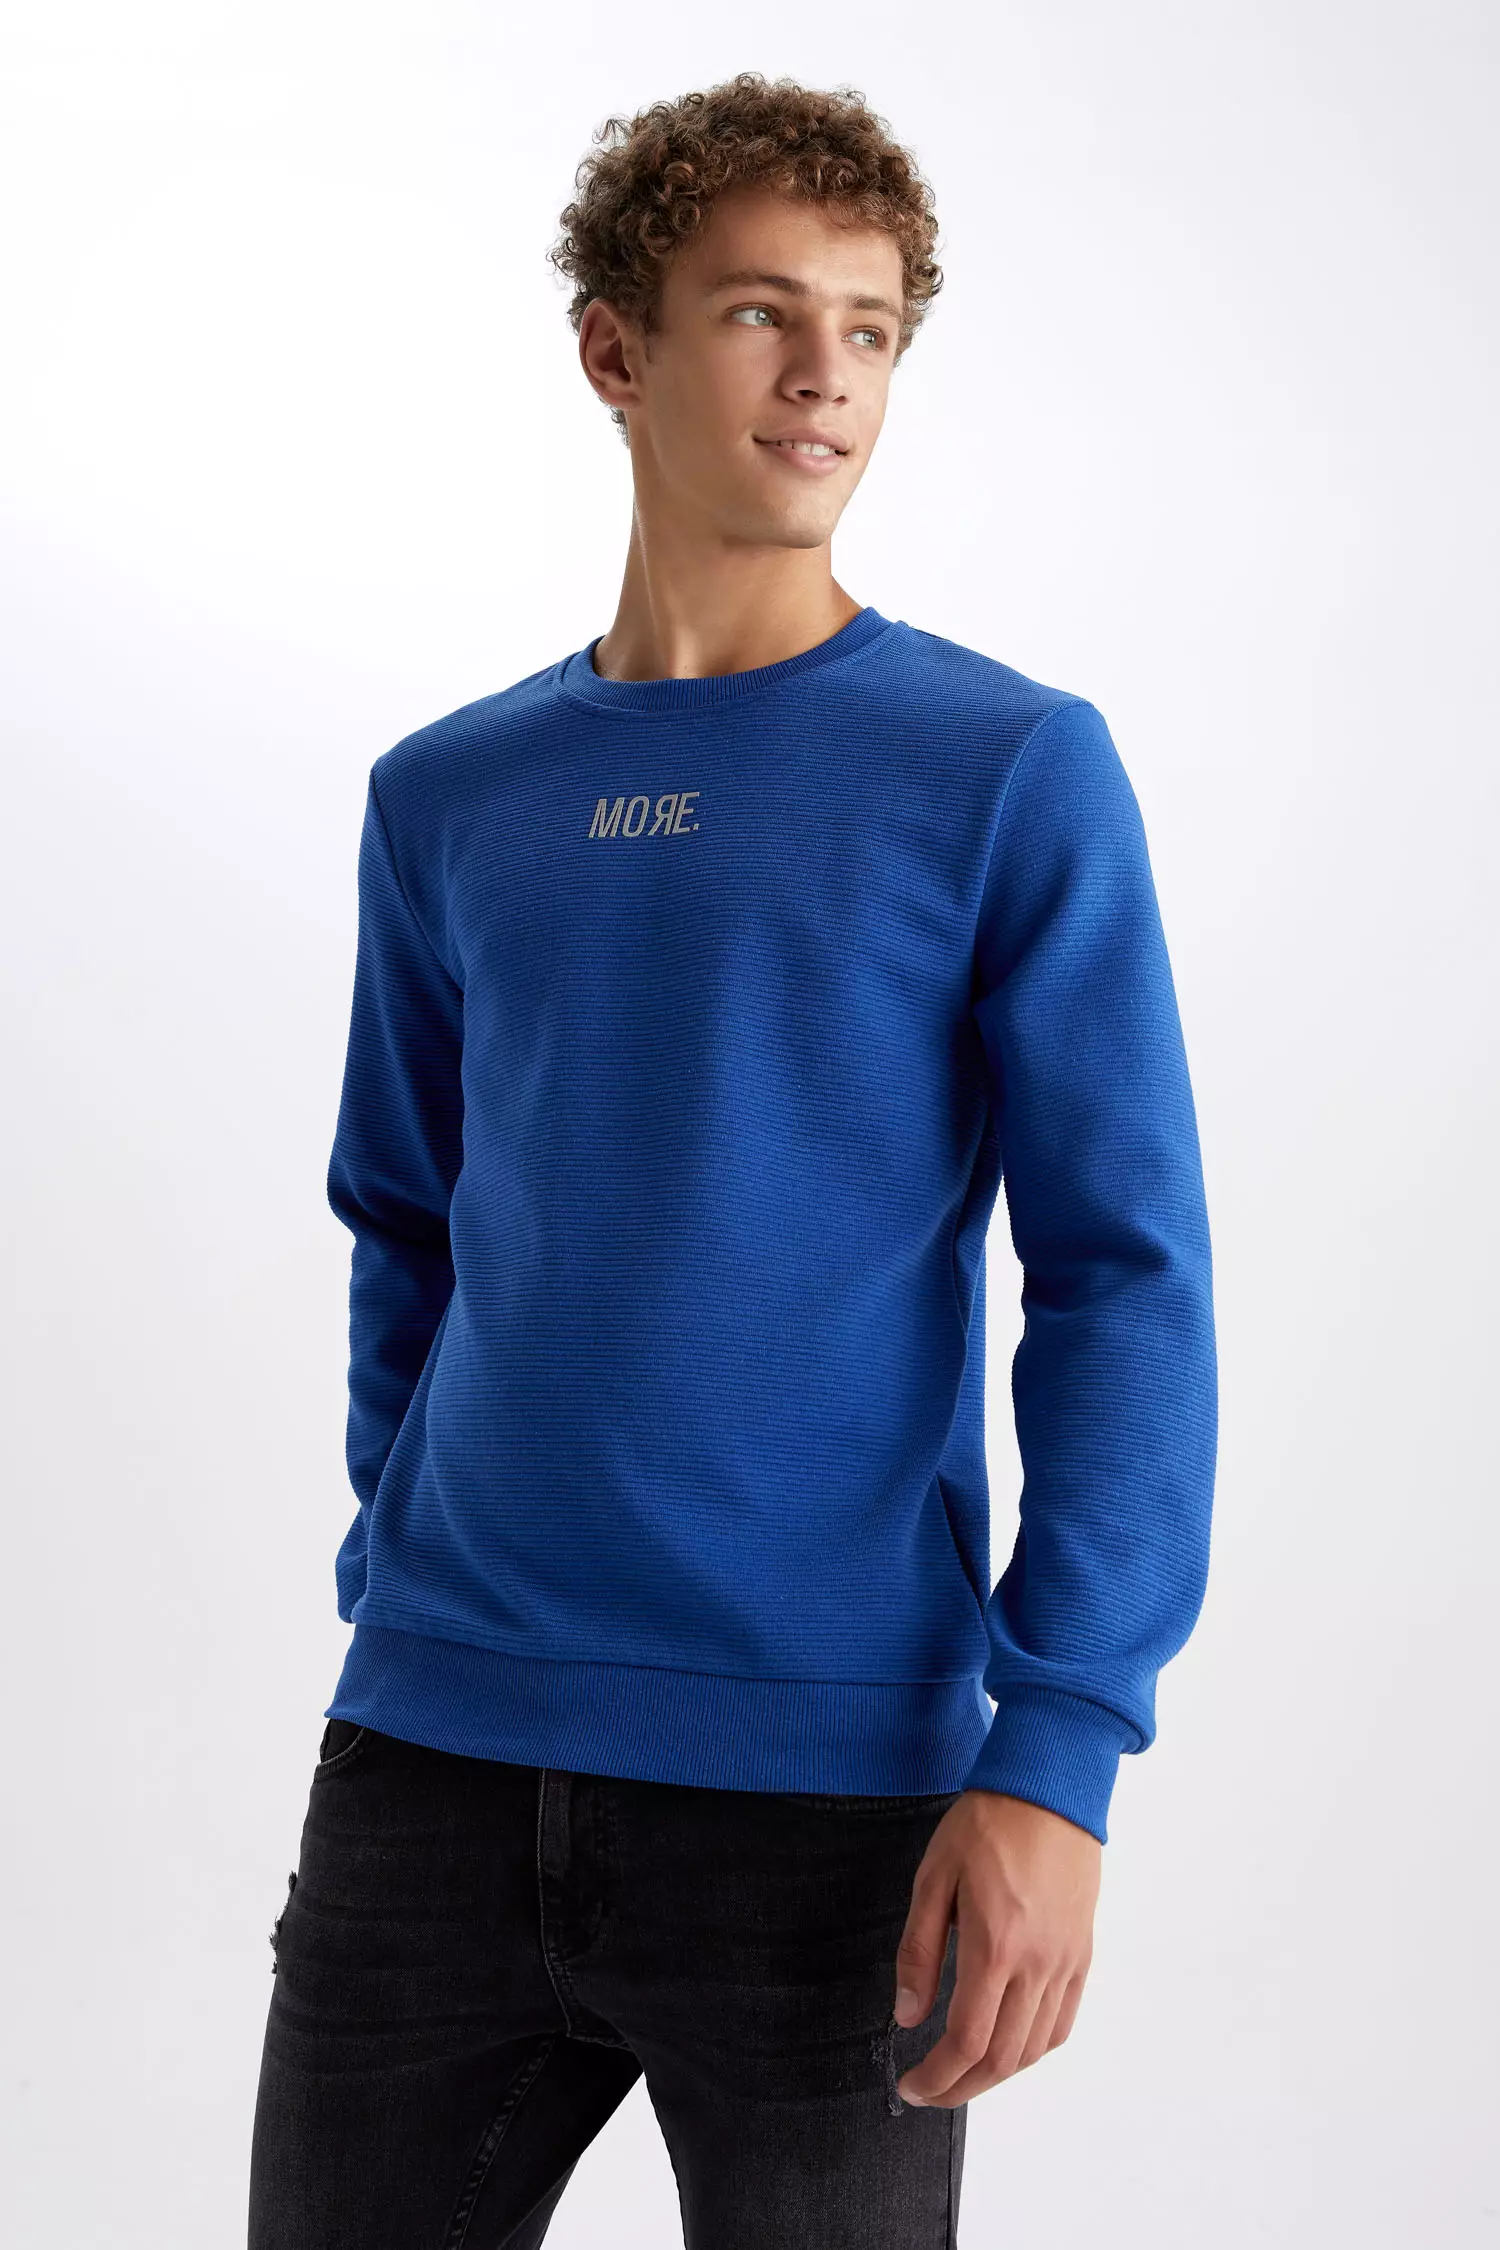 Men's Hoodies & Sweatshirts - Up to 90% Off | ZALORA